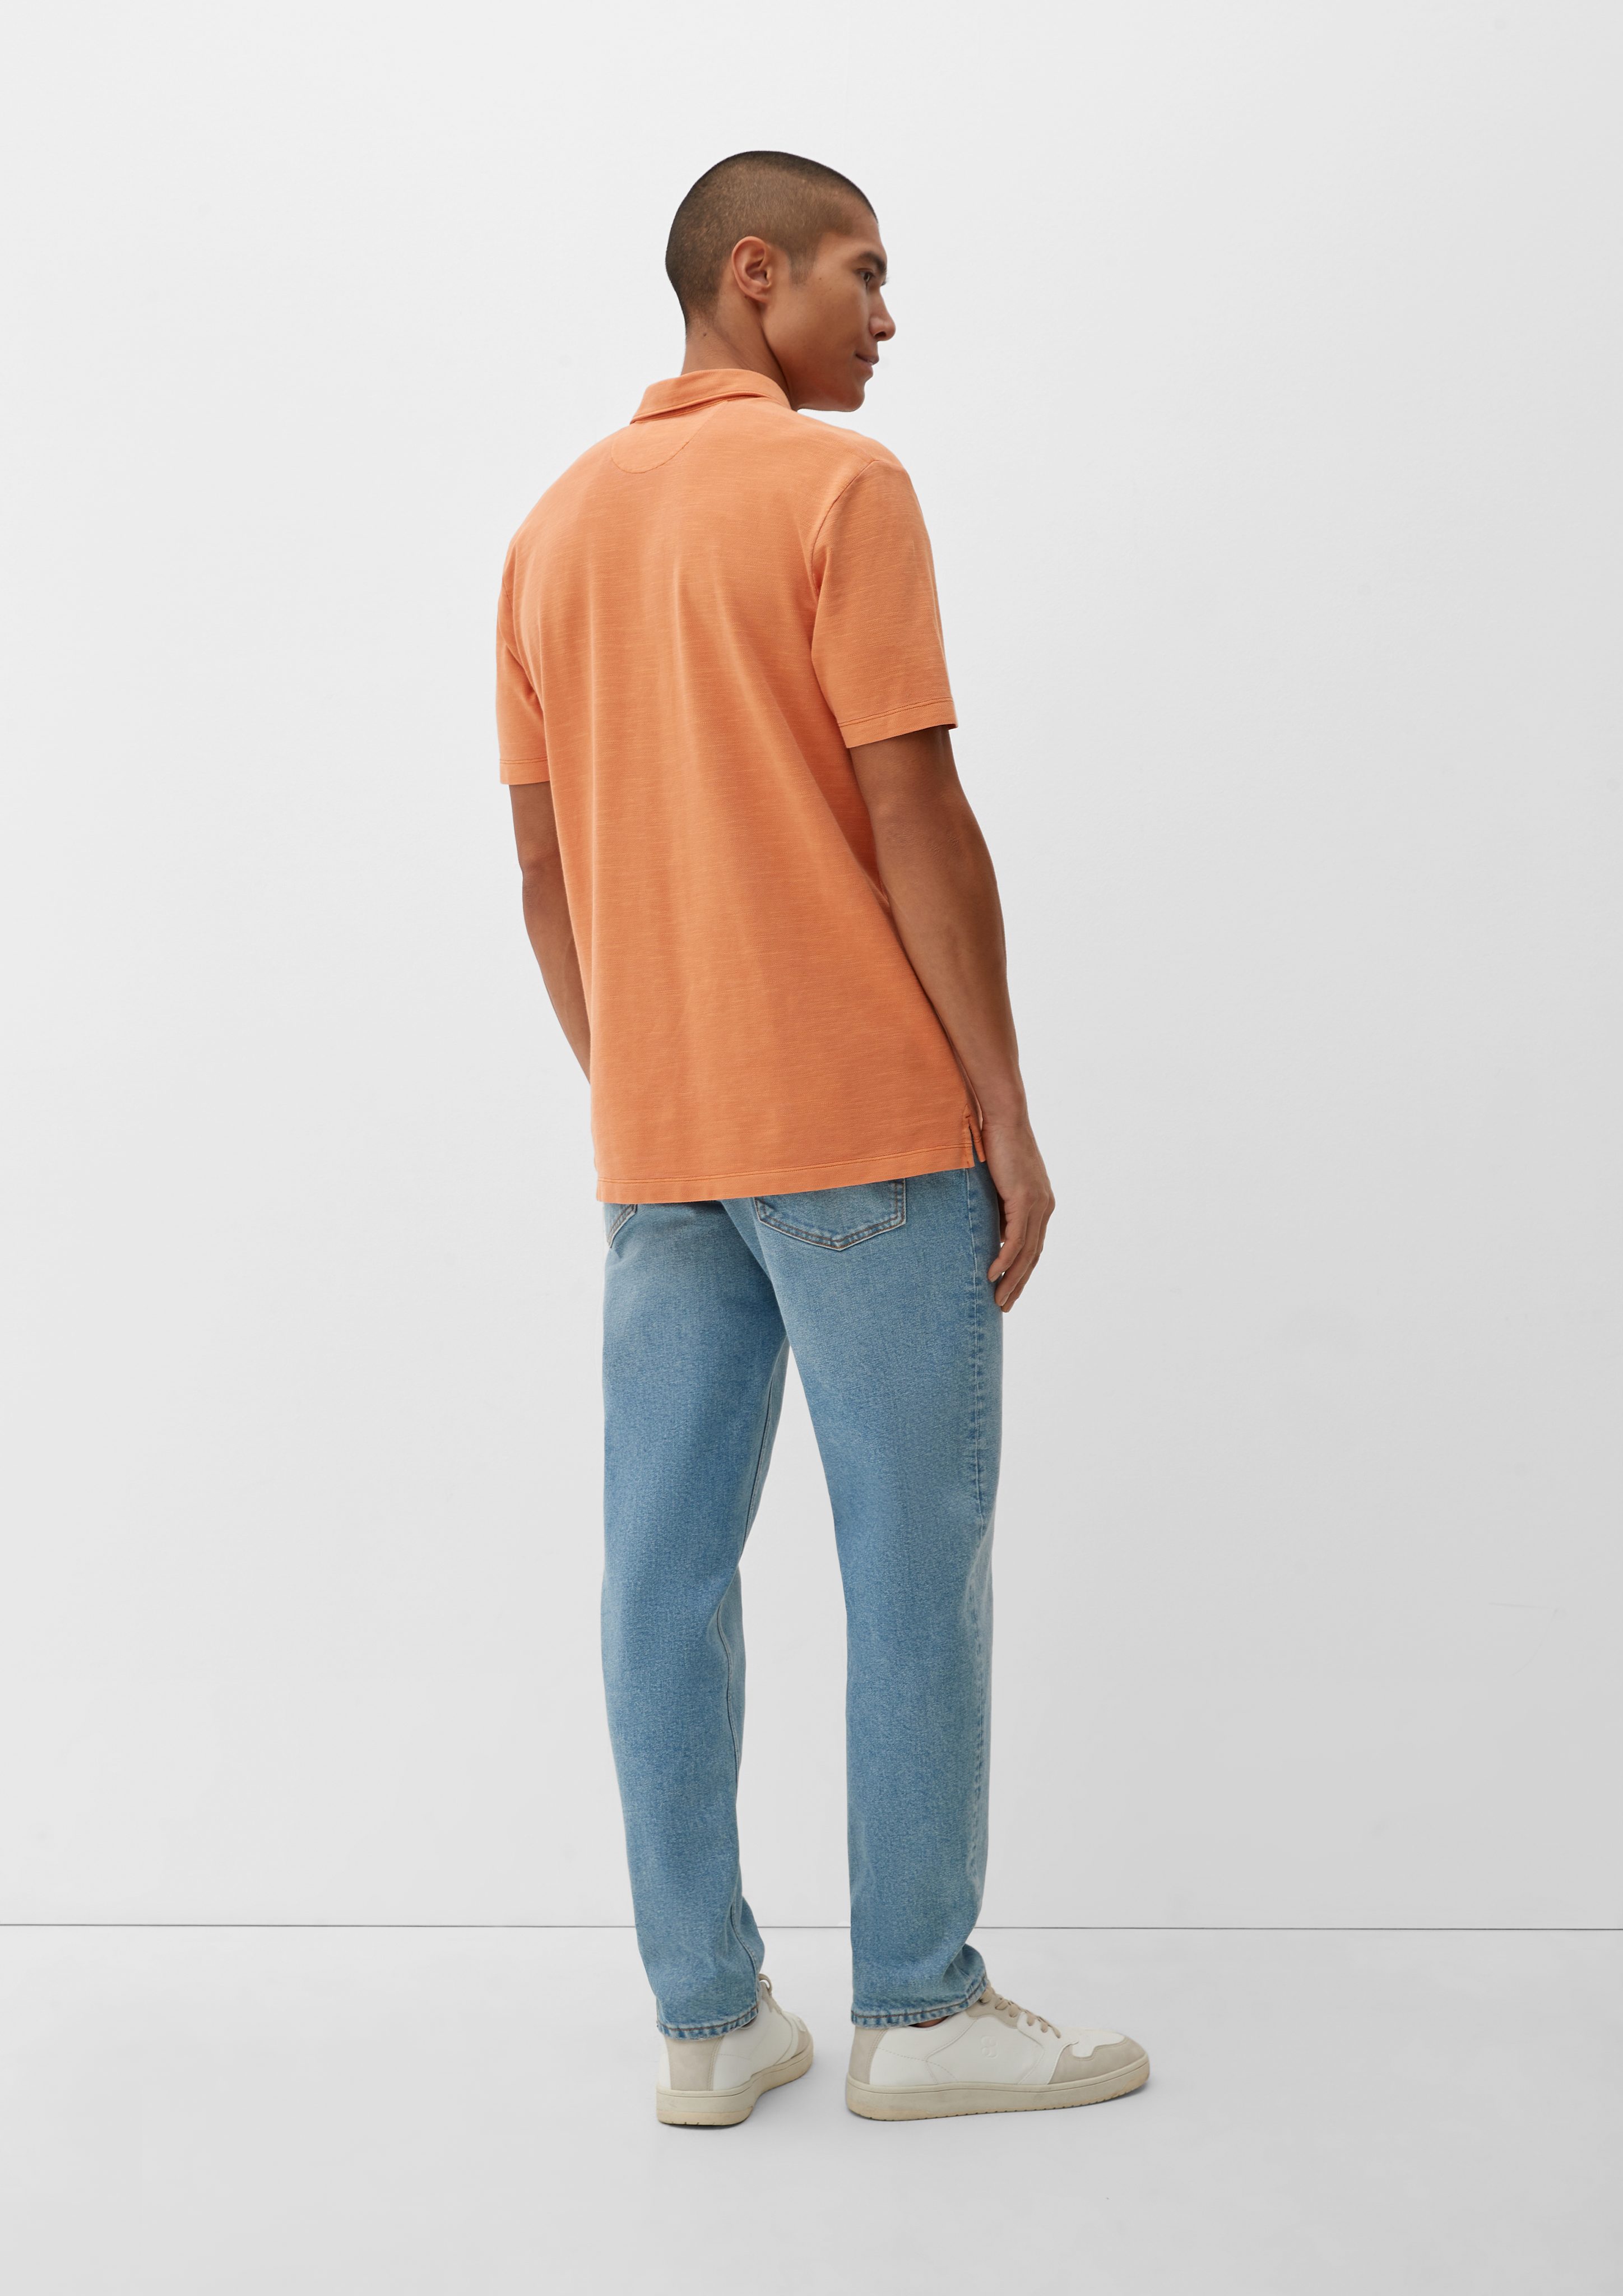 Poloshirt Label-Patch orange mit Label-Patch s.Oliver Kurzarmshirt